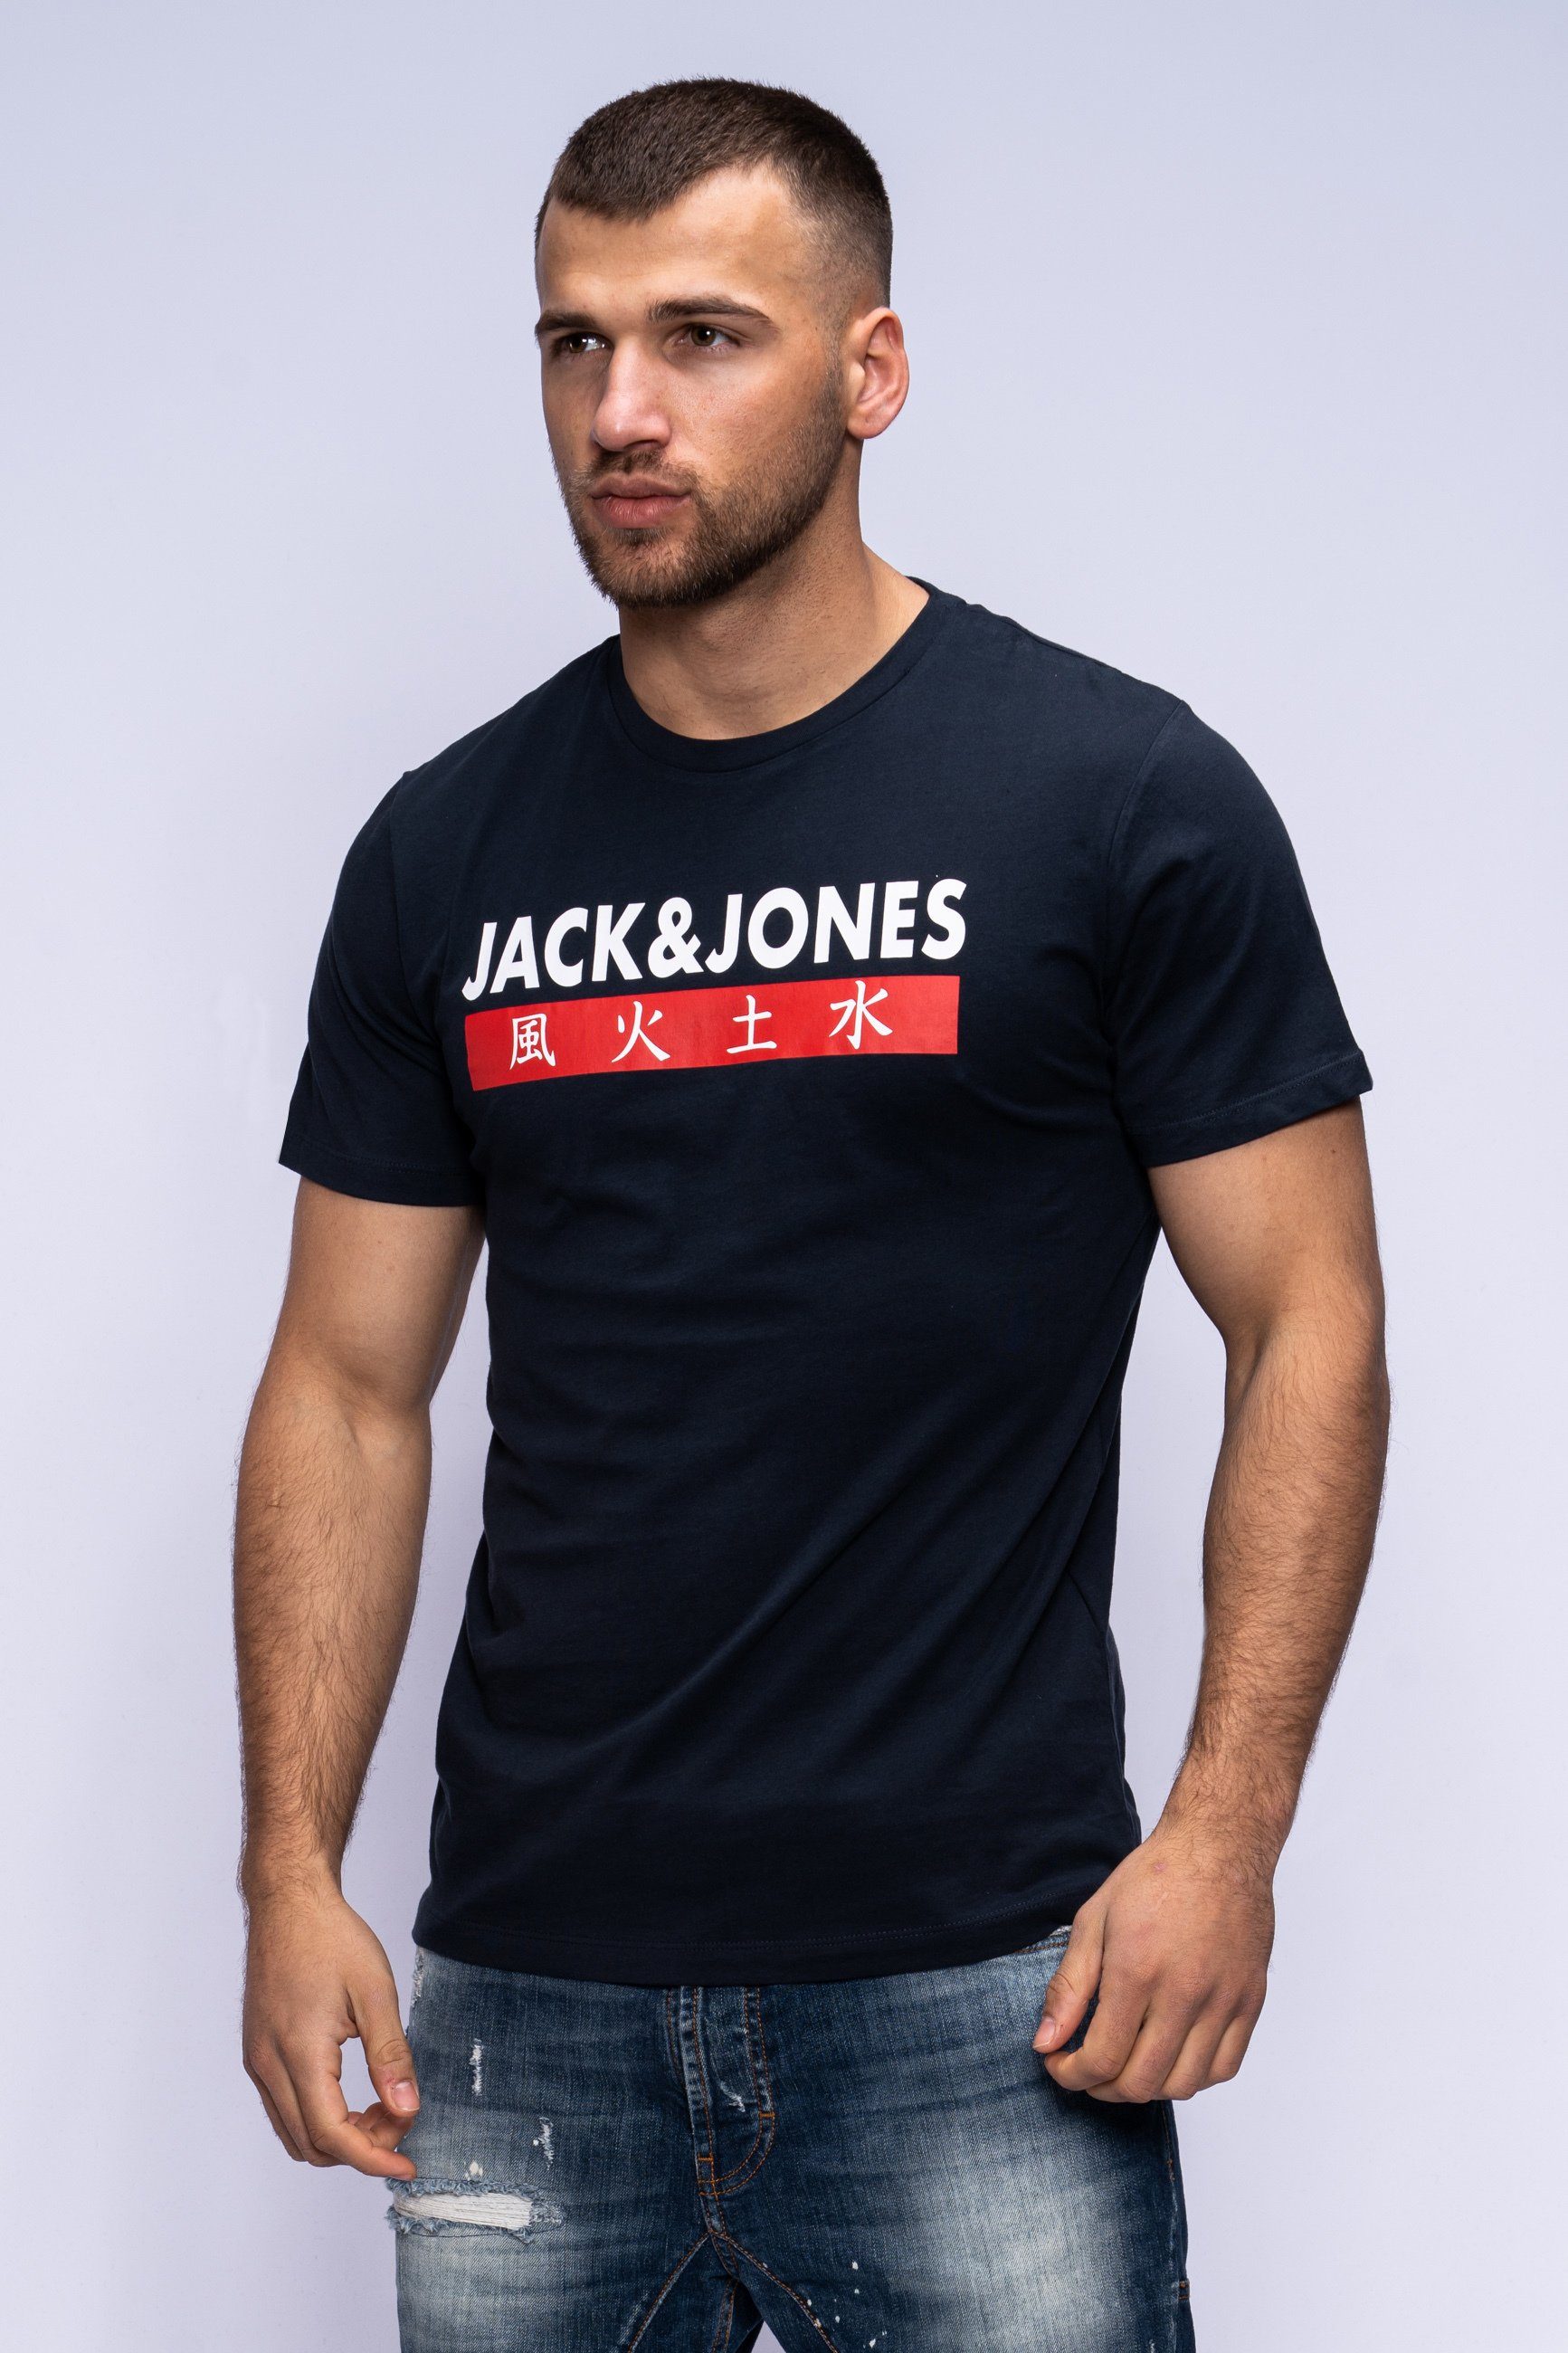 Jack CREW ELEMENTS TEE Print-Shirt & NECK Jones Total SS Eclipse